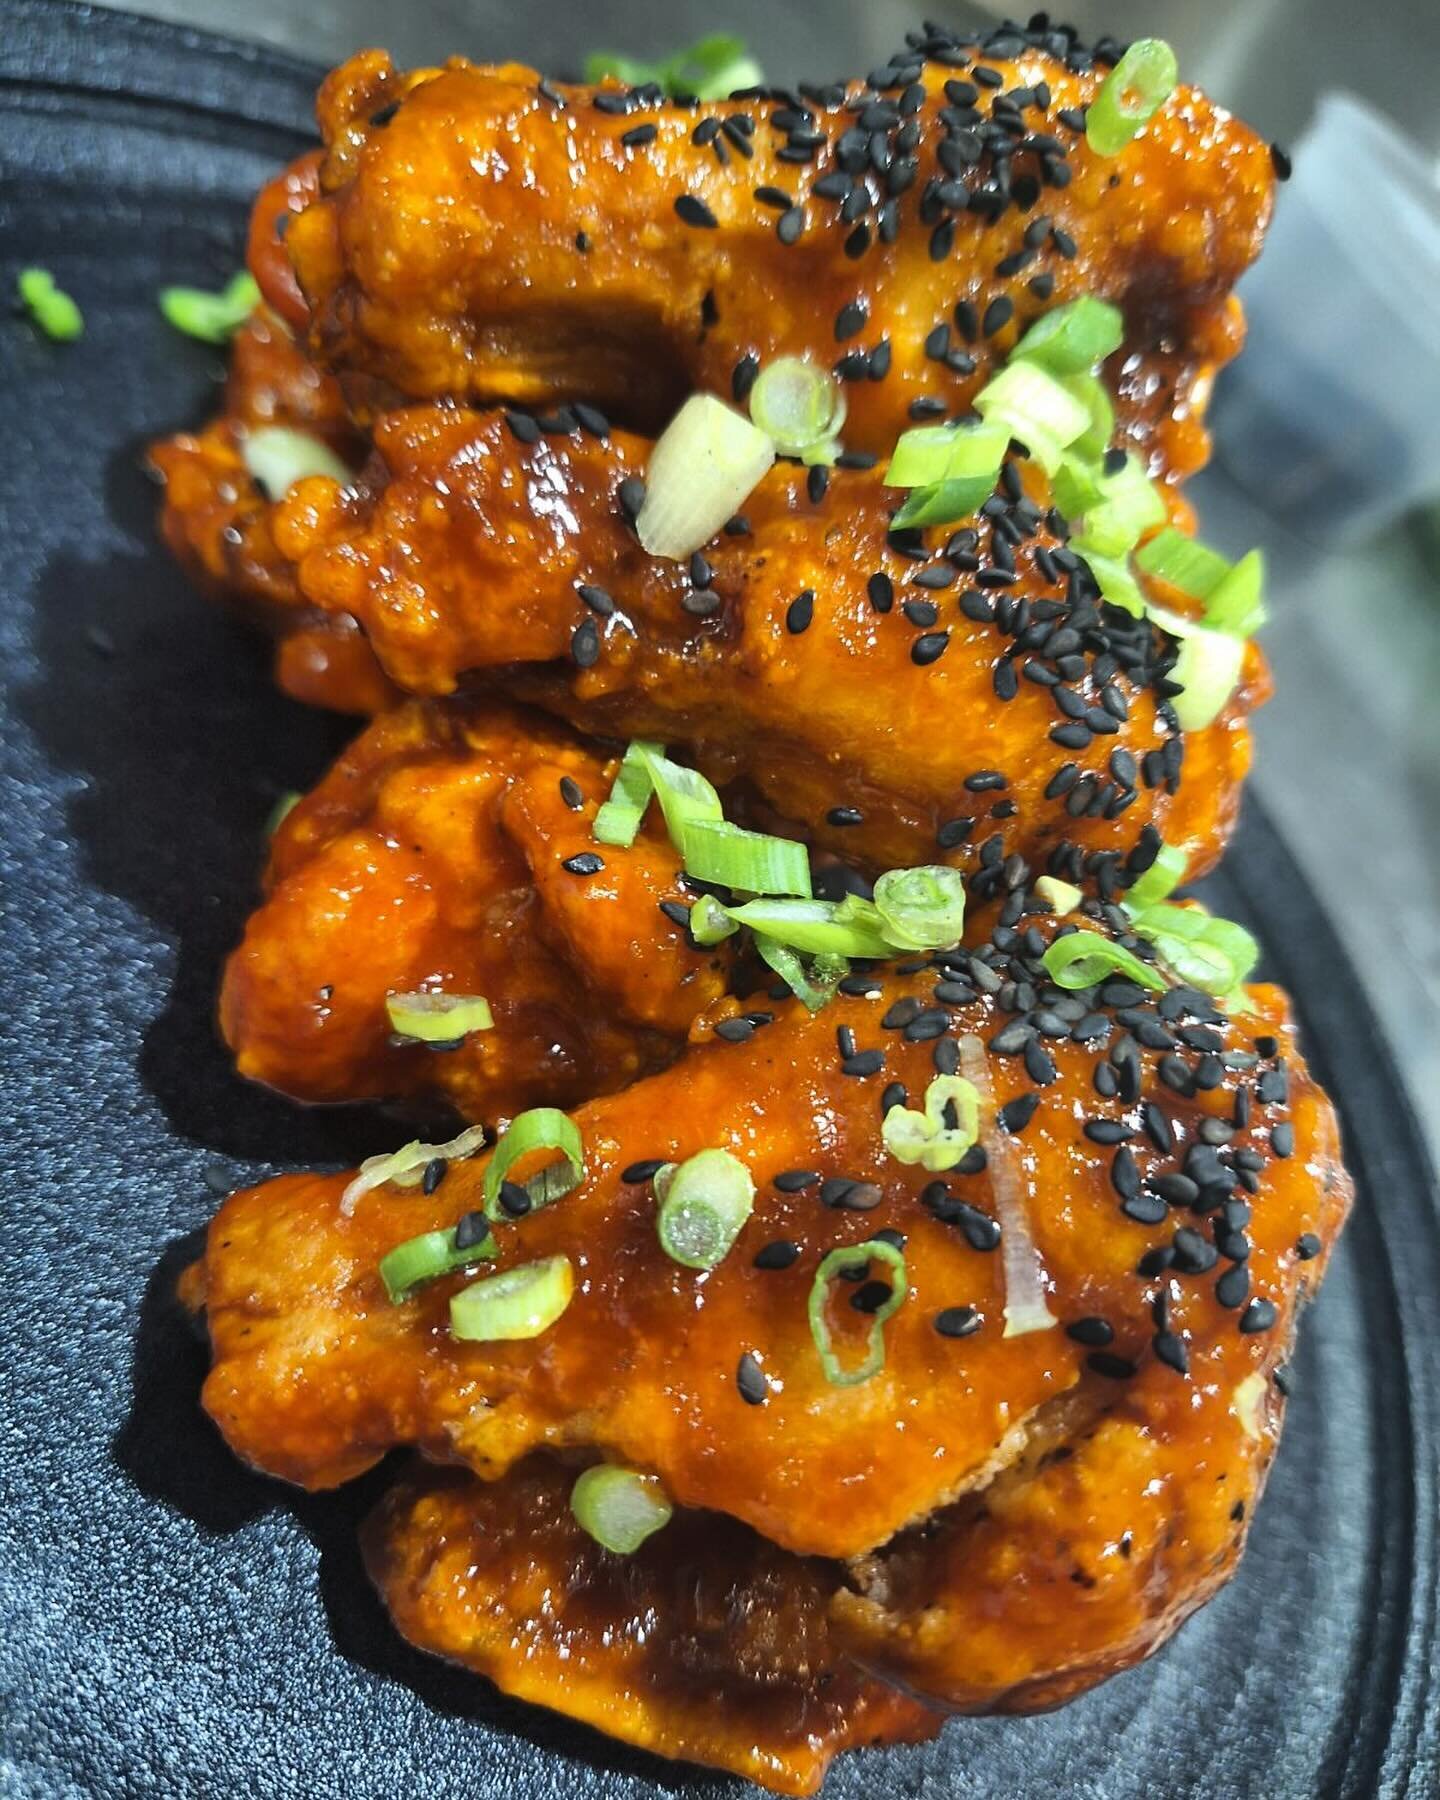 New Tavern and Bar Bites item:
Korean Chicken Wings / Bulgogi style / Scallion / Black Sesame Seed

#tavern #barbites #wings #comfortfood #foodie #winelover #boutiquehotel #vermont #winterwonderland #apres